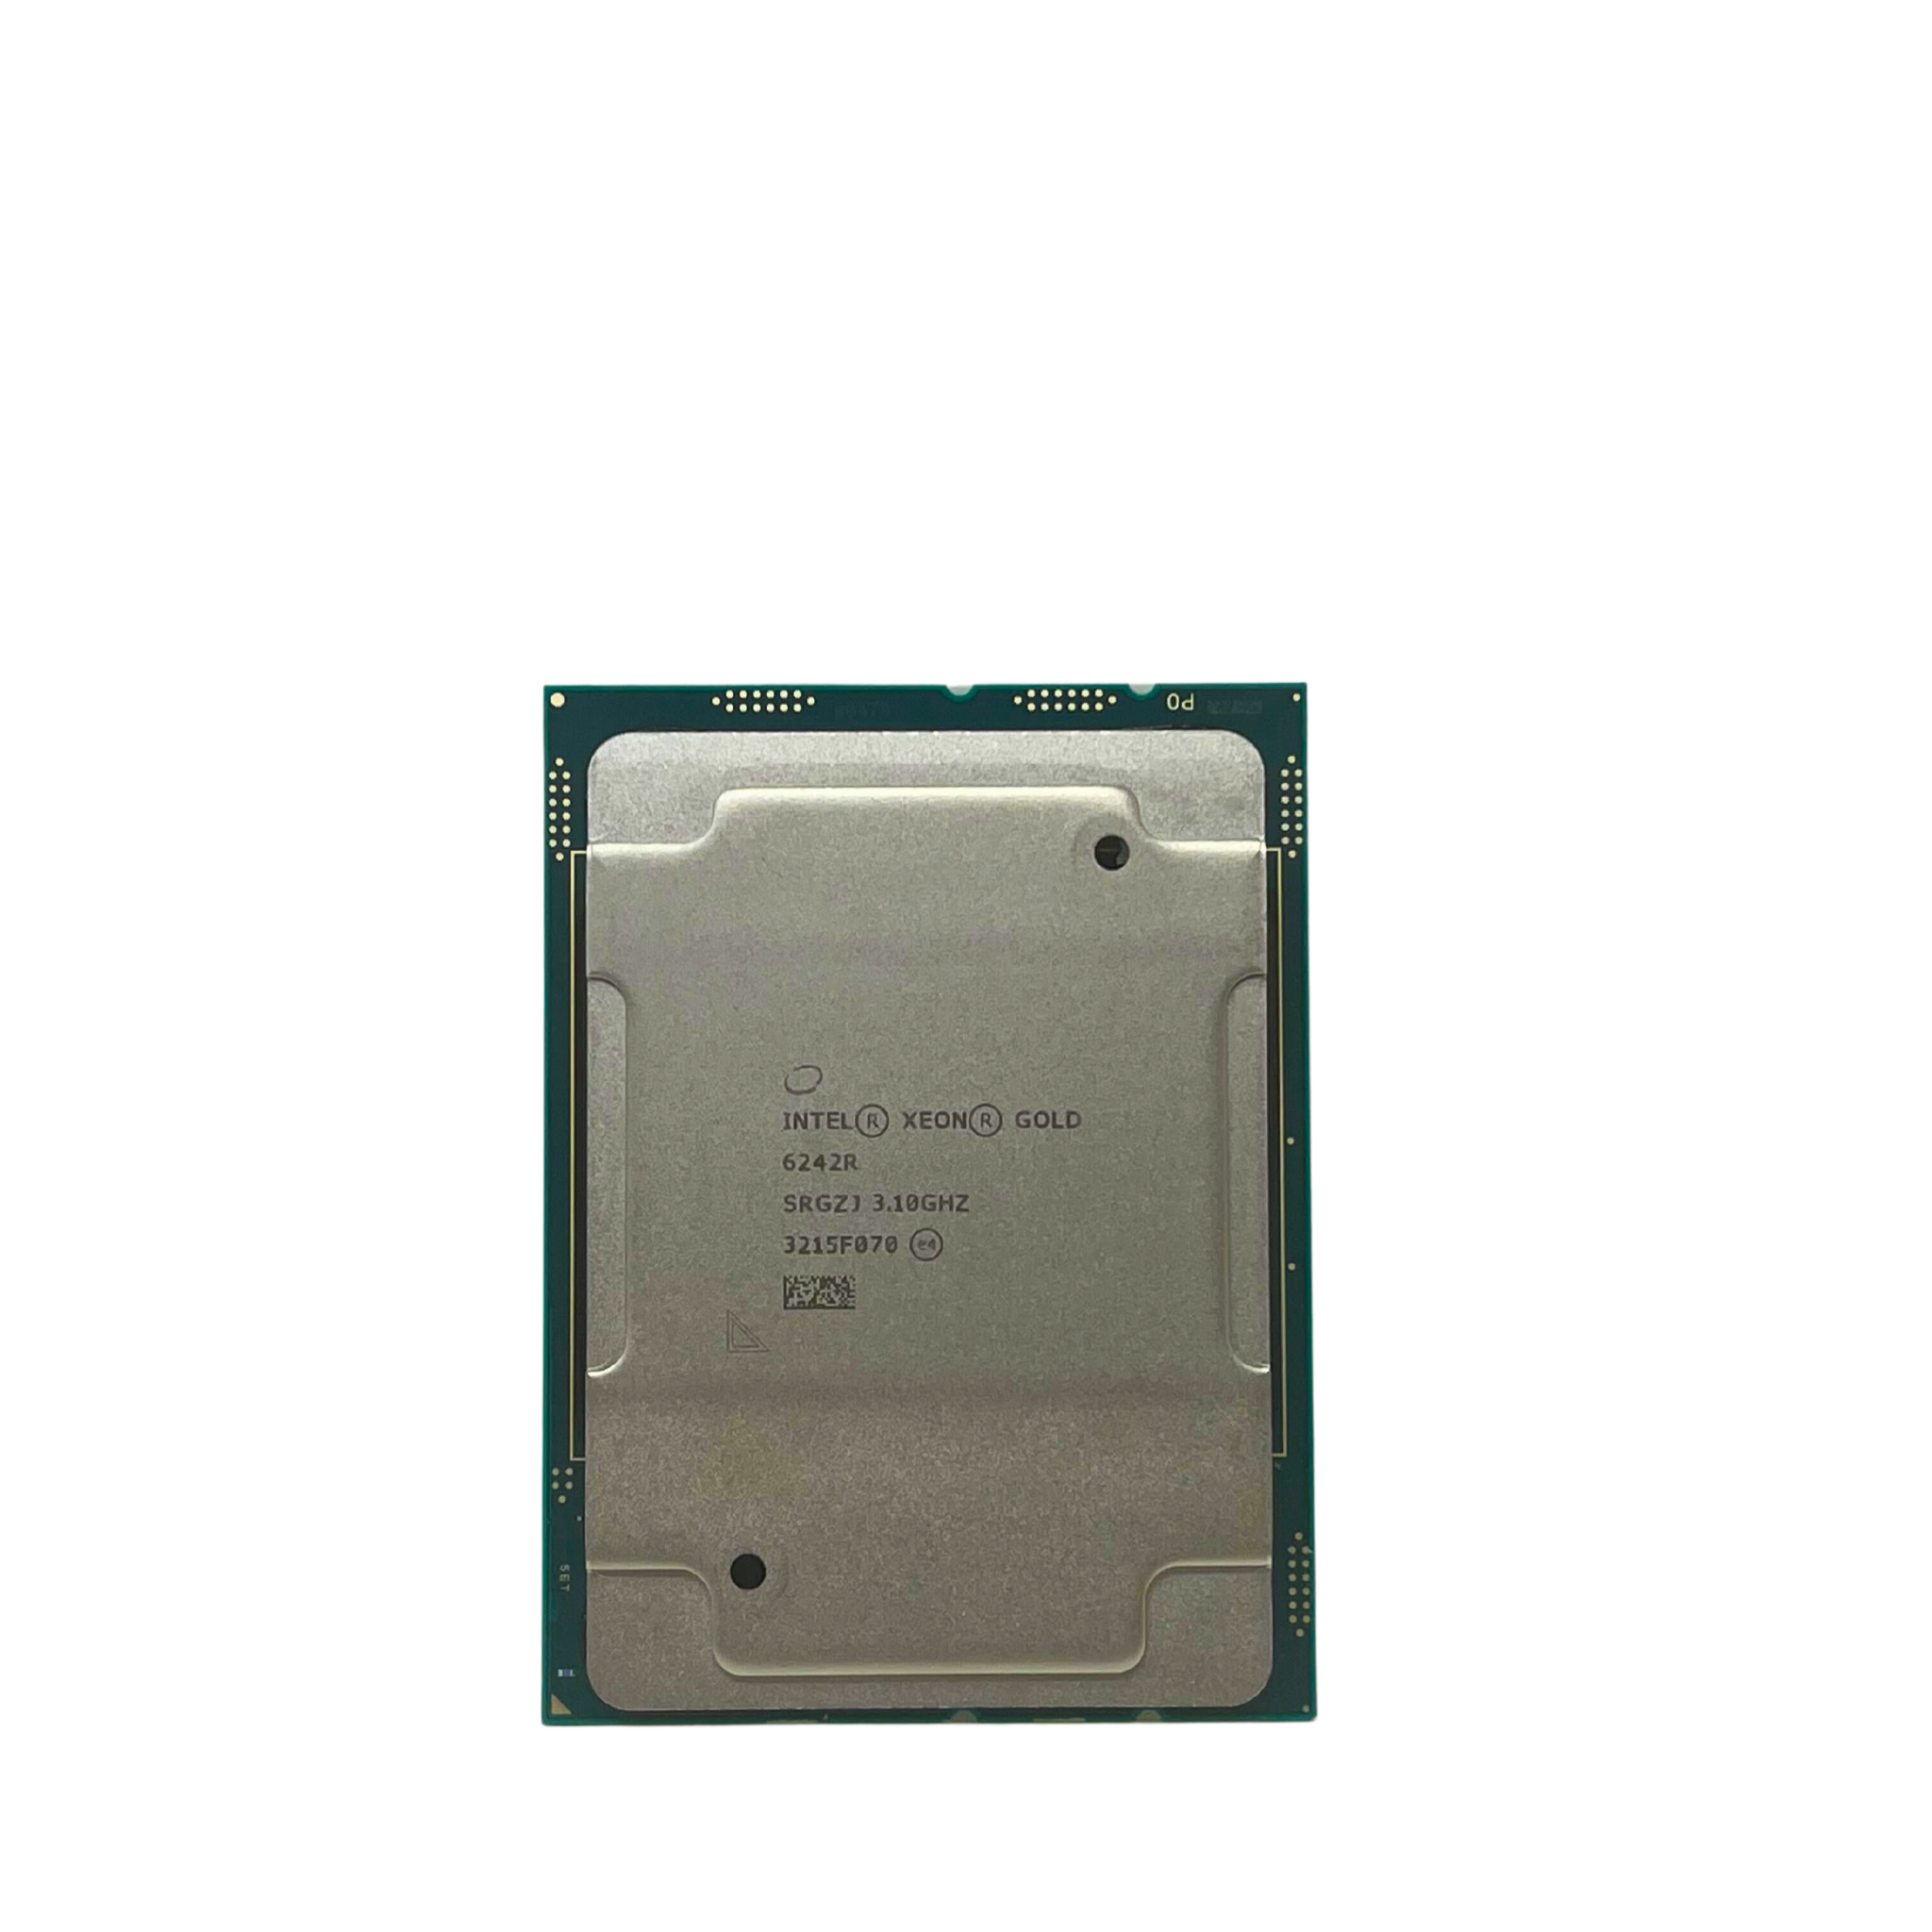 Intel Xeon Gold 6242R 20-core 3.10ghz 35.75mb L3 Cache Socket FCLGA3647 Processor (SRGZJ)